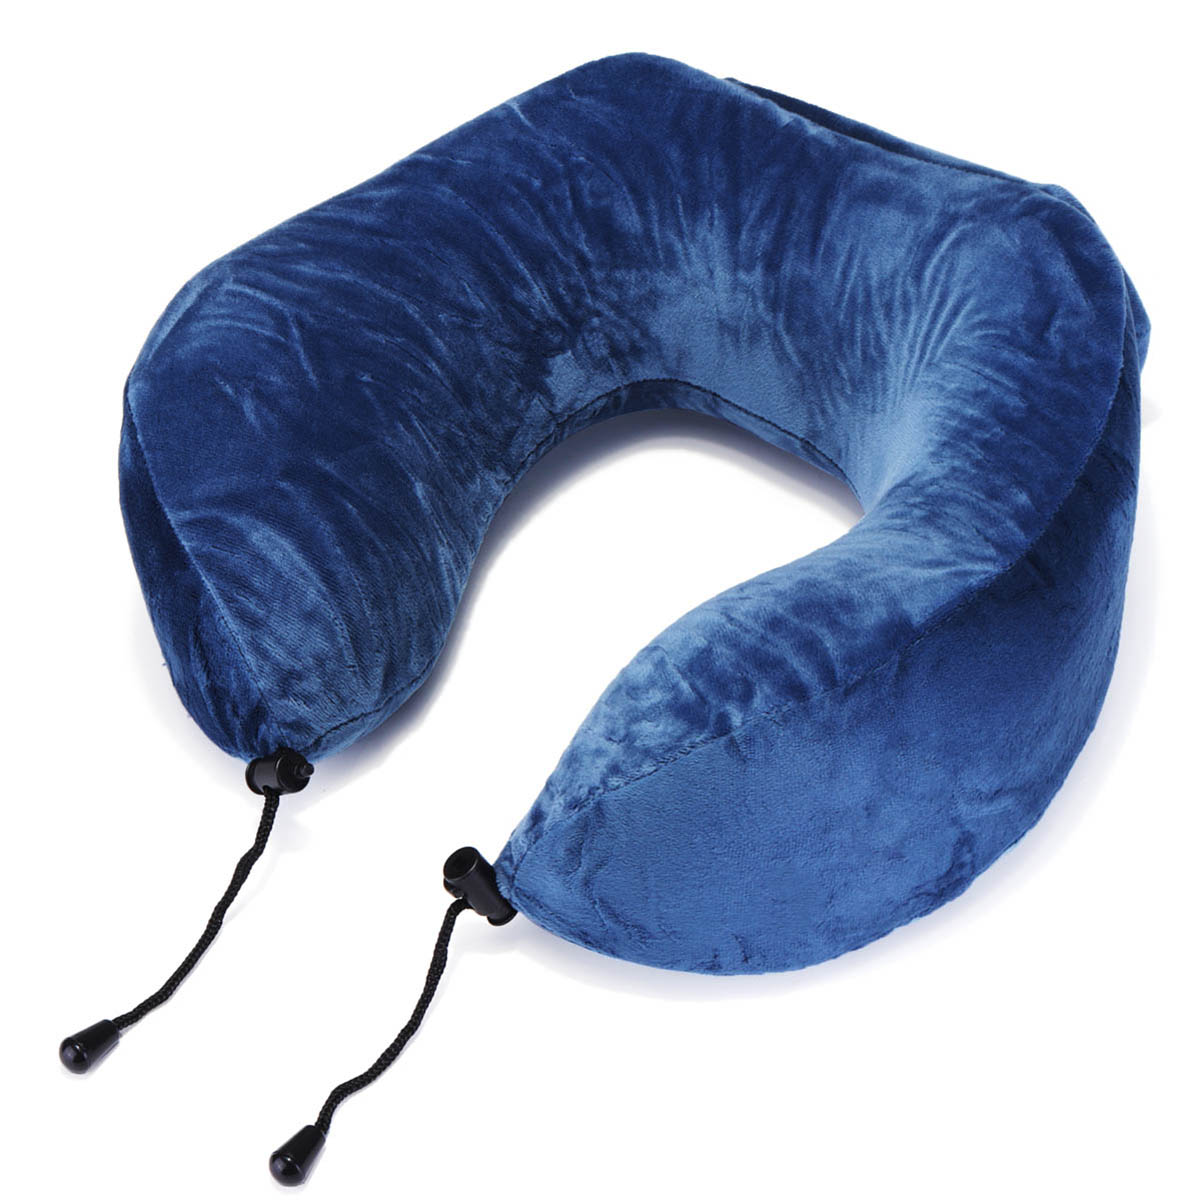 Honana-BX-28x28x13cm-Blue-Slow-Rebound-Memory-Cotton-Neck-Pillow-U-Type-Pillow-Storage-Pillow-1306535-5